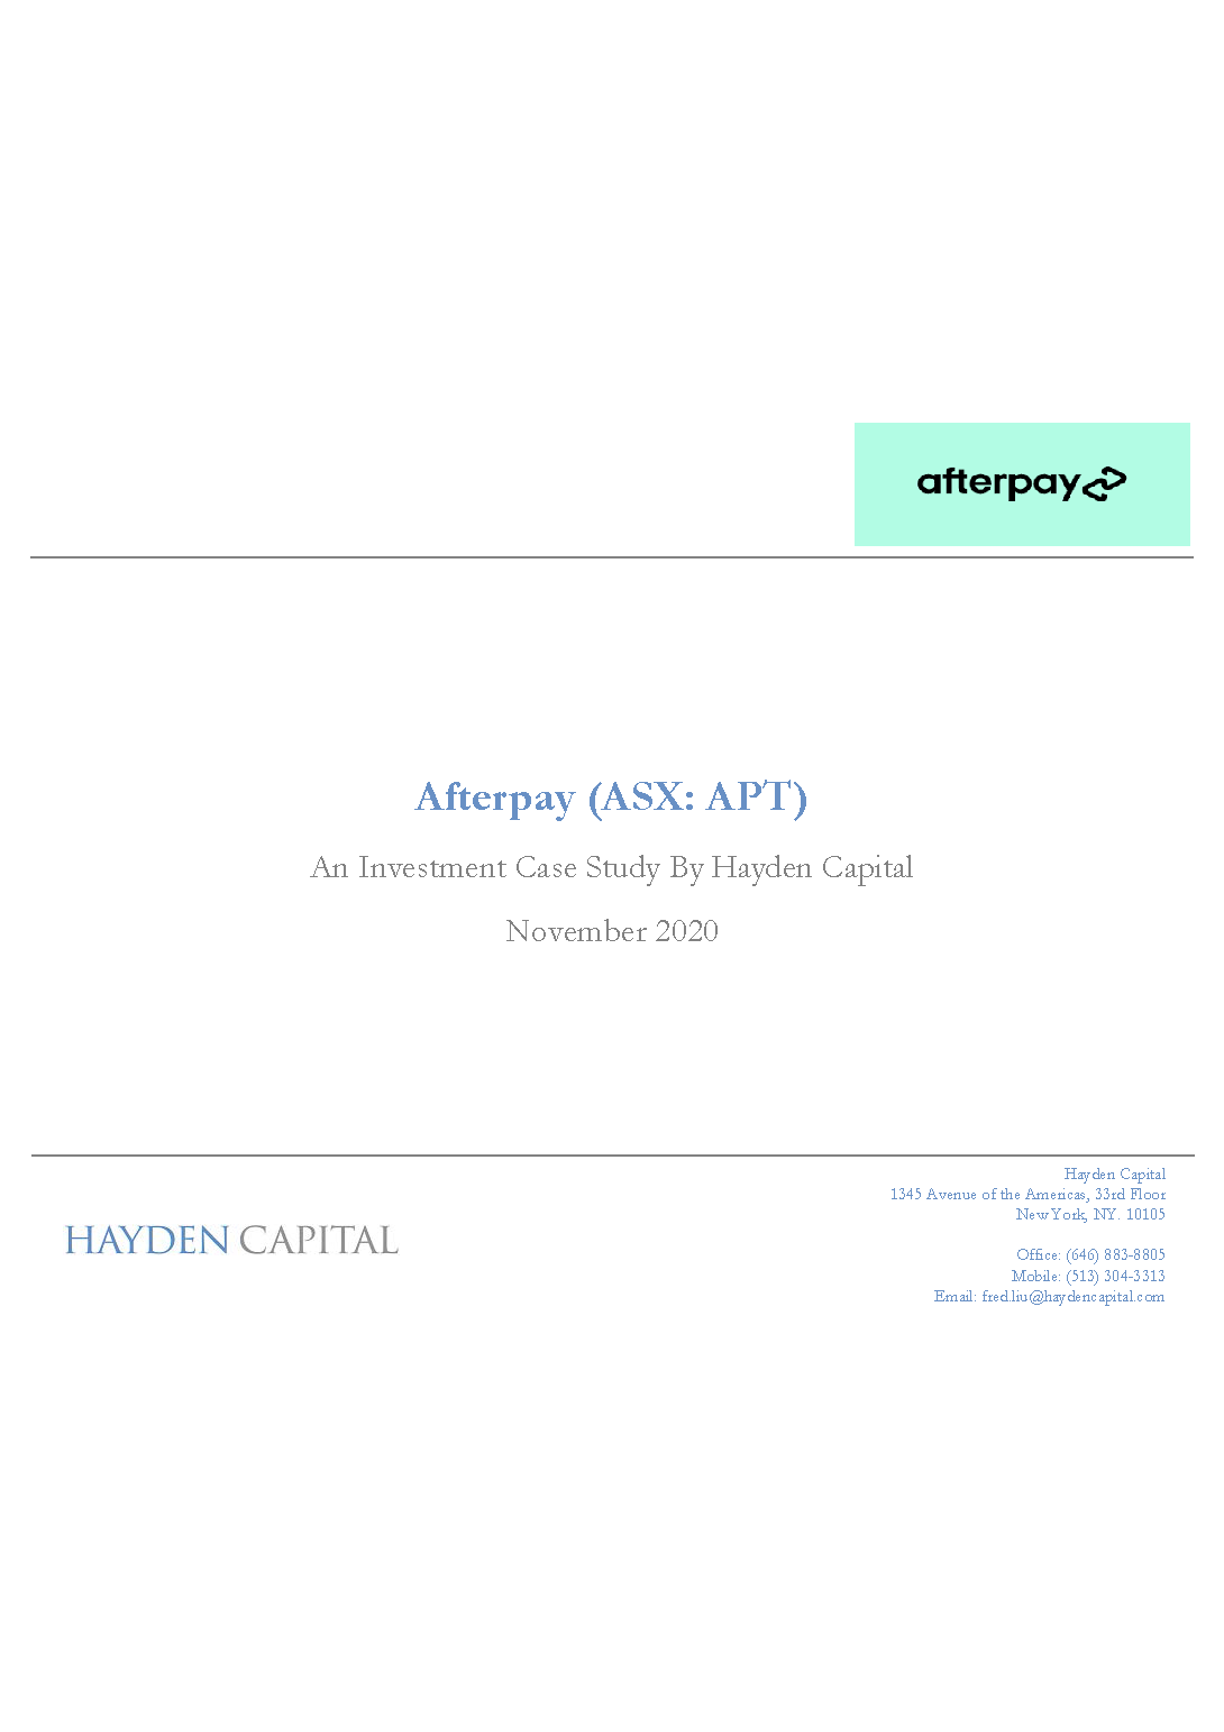 Afterpay Writeup (ASX: APT)